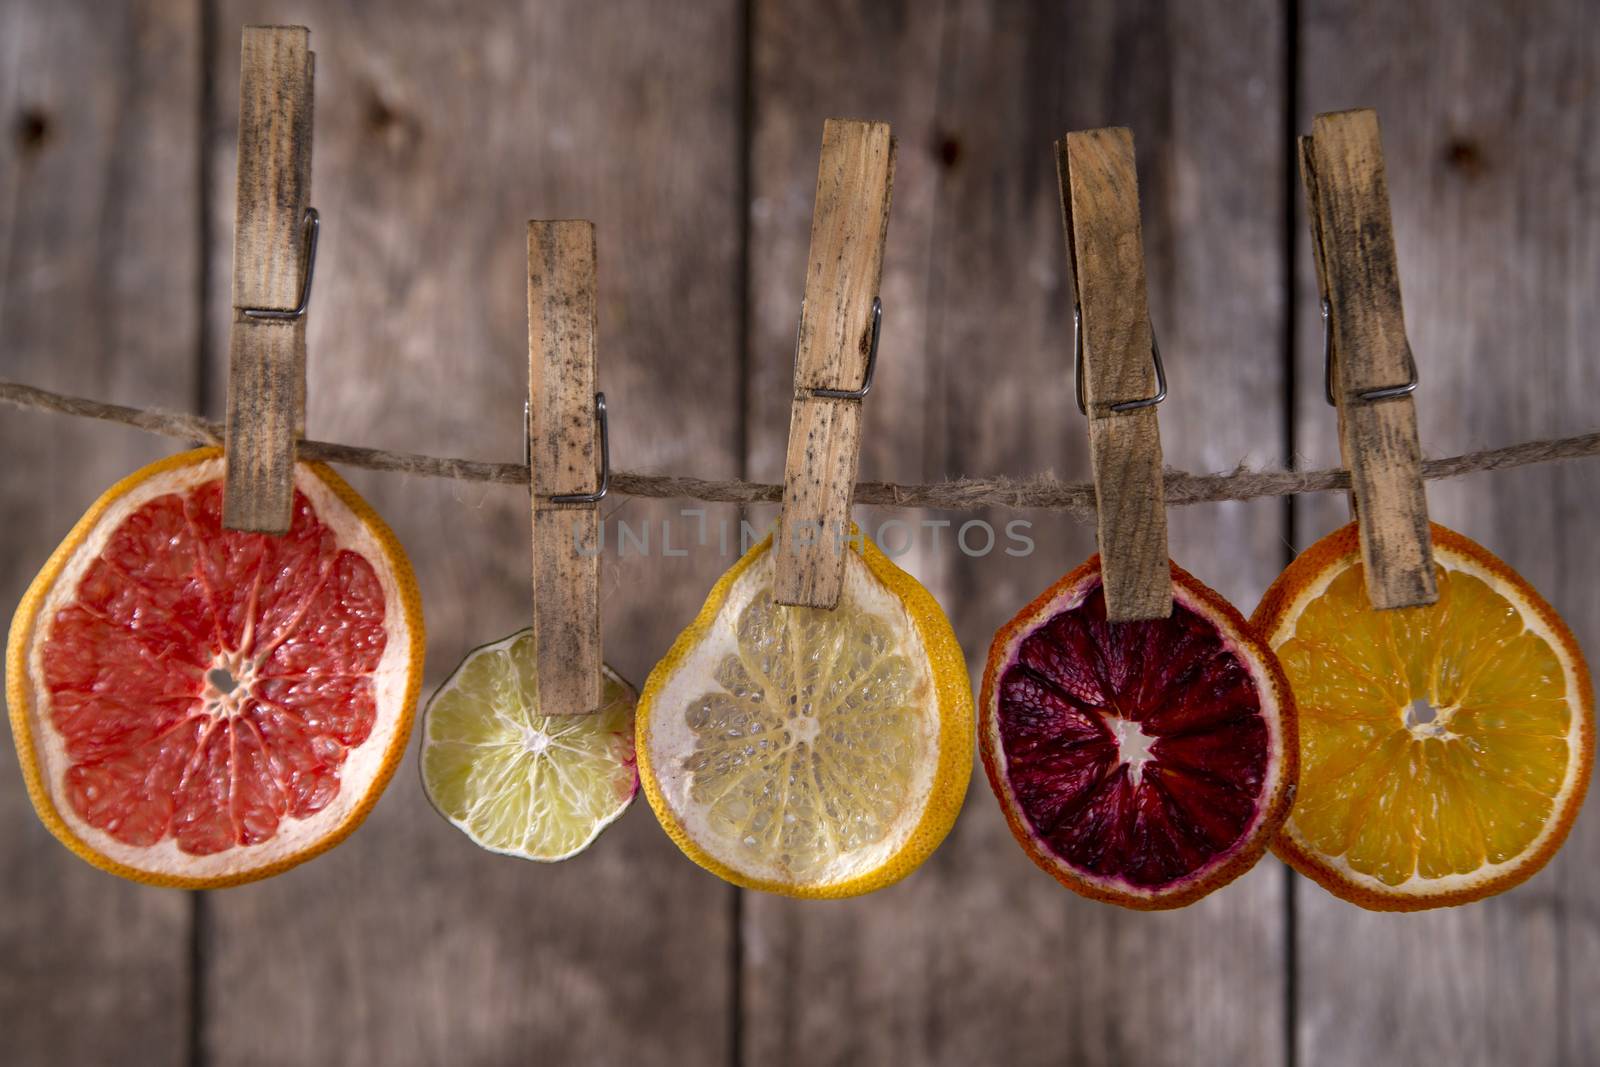 The colors of the dried citrus fruit by fotografiche.eu